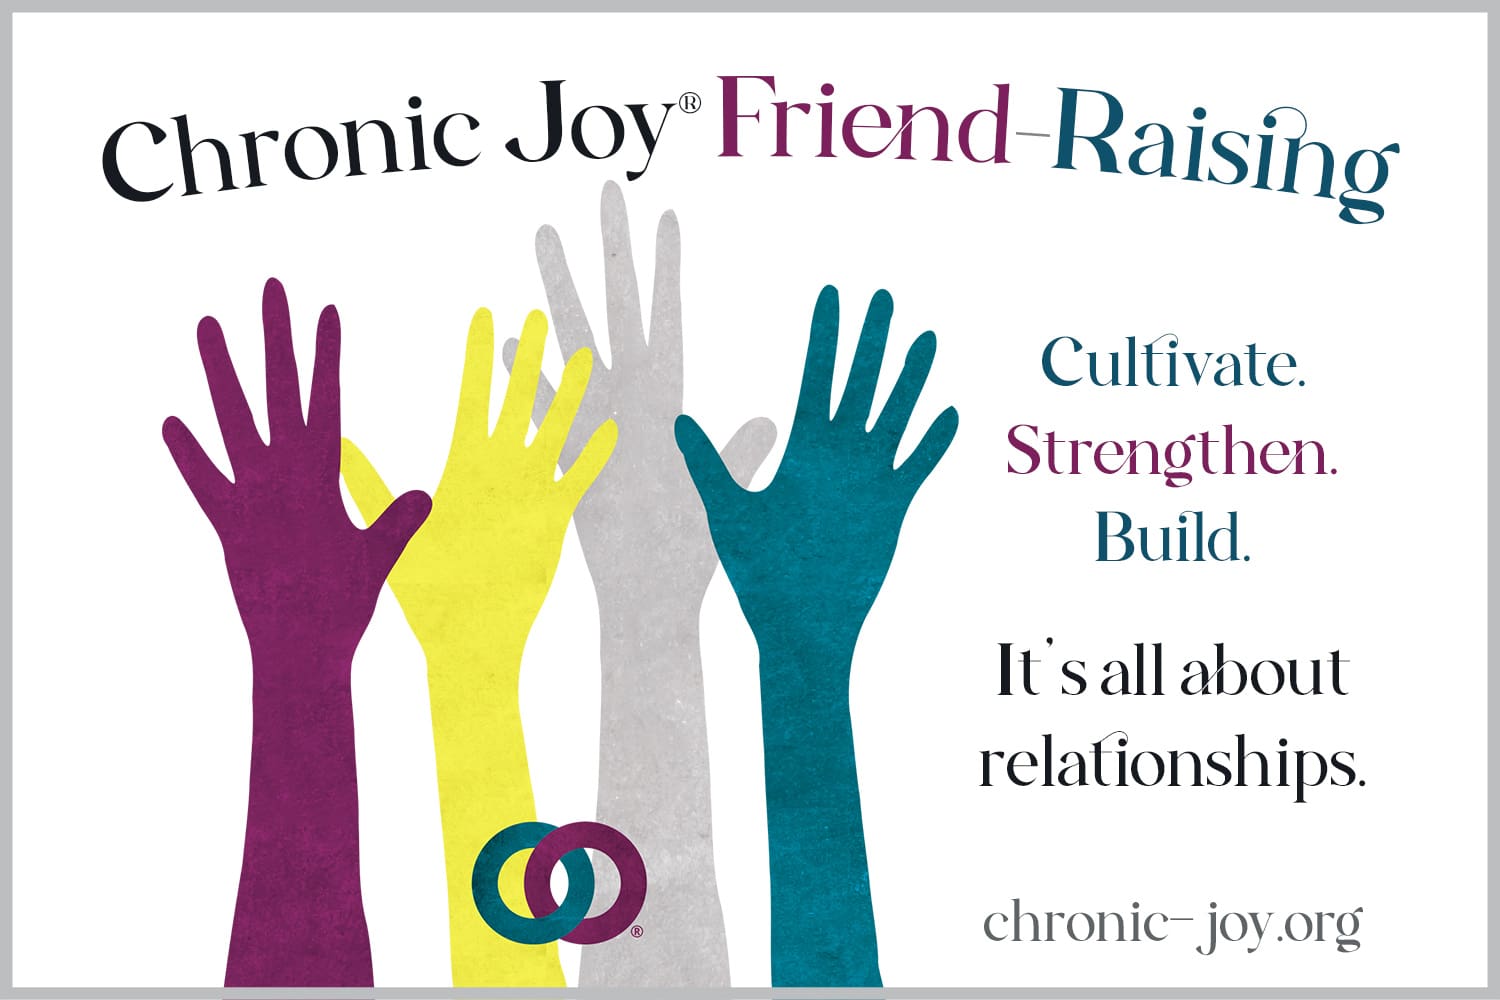 Chronic Joy Friend-Raising